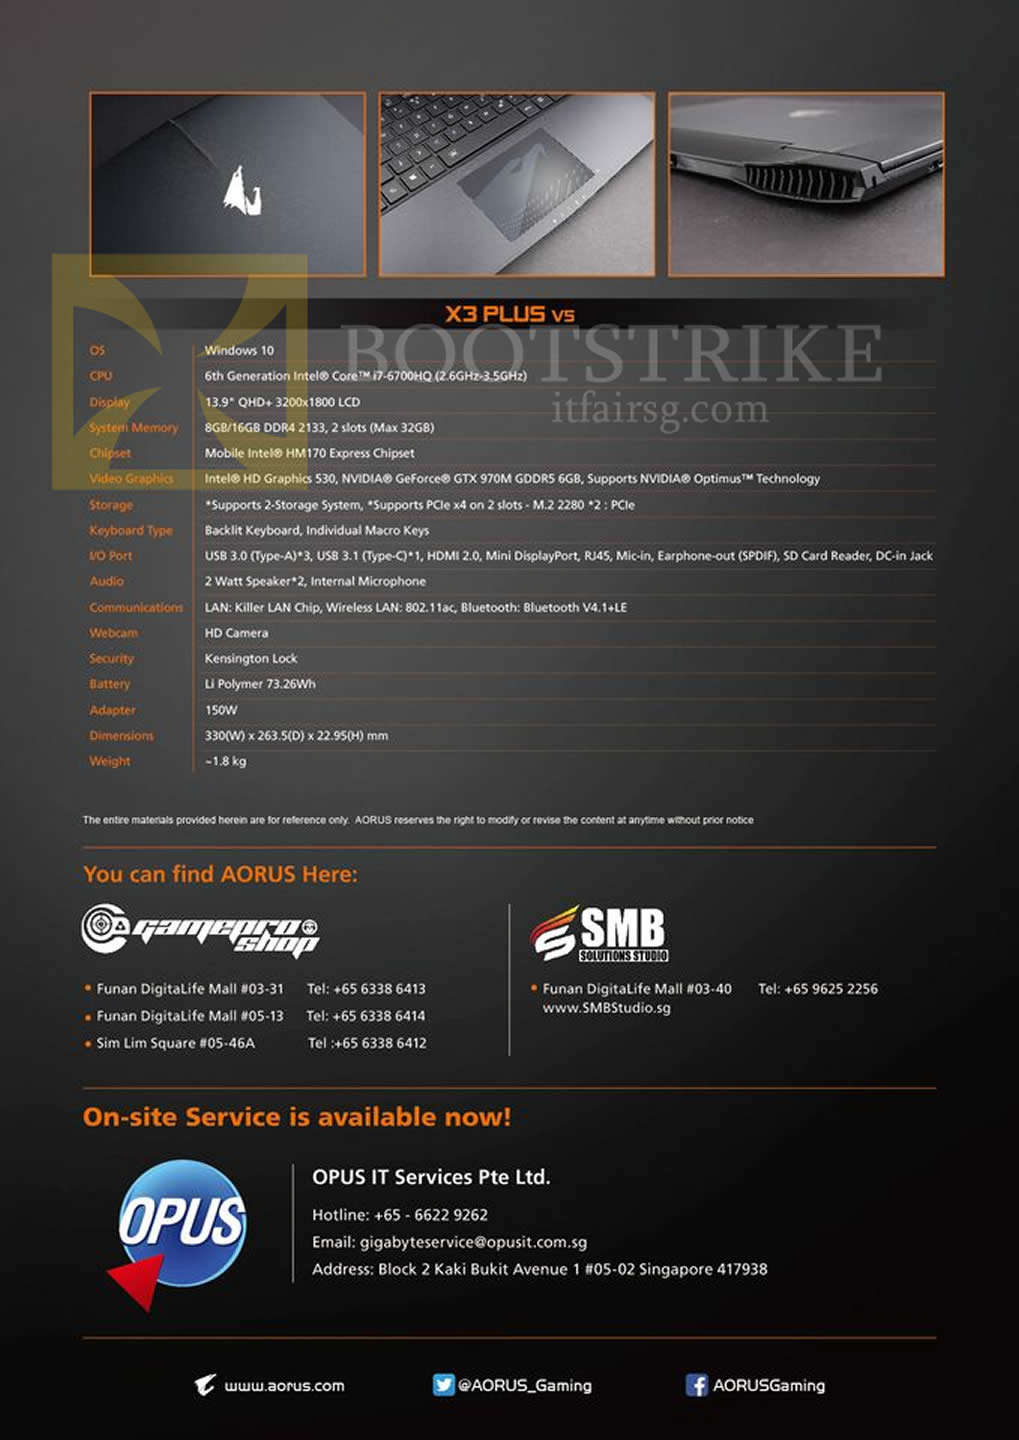 SITEX 2015 price list image brochure of Gamepro Aorus X3 Plus Vs Features